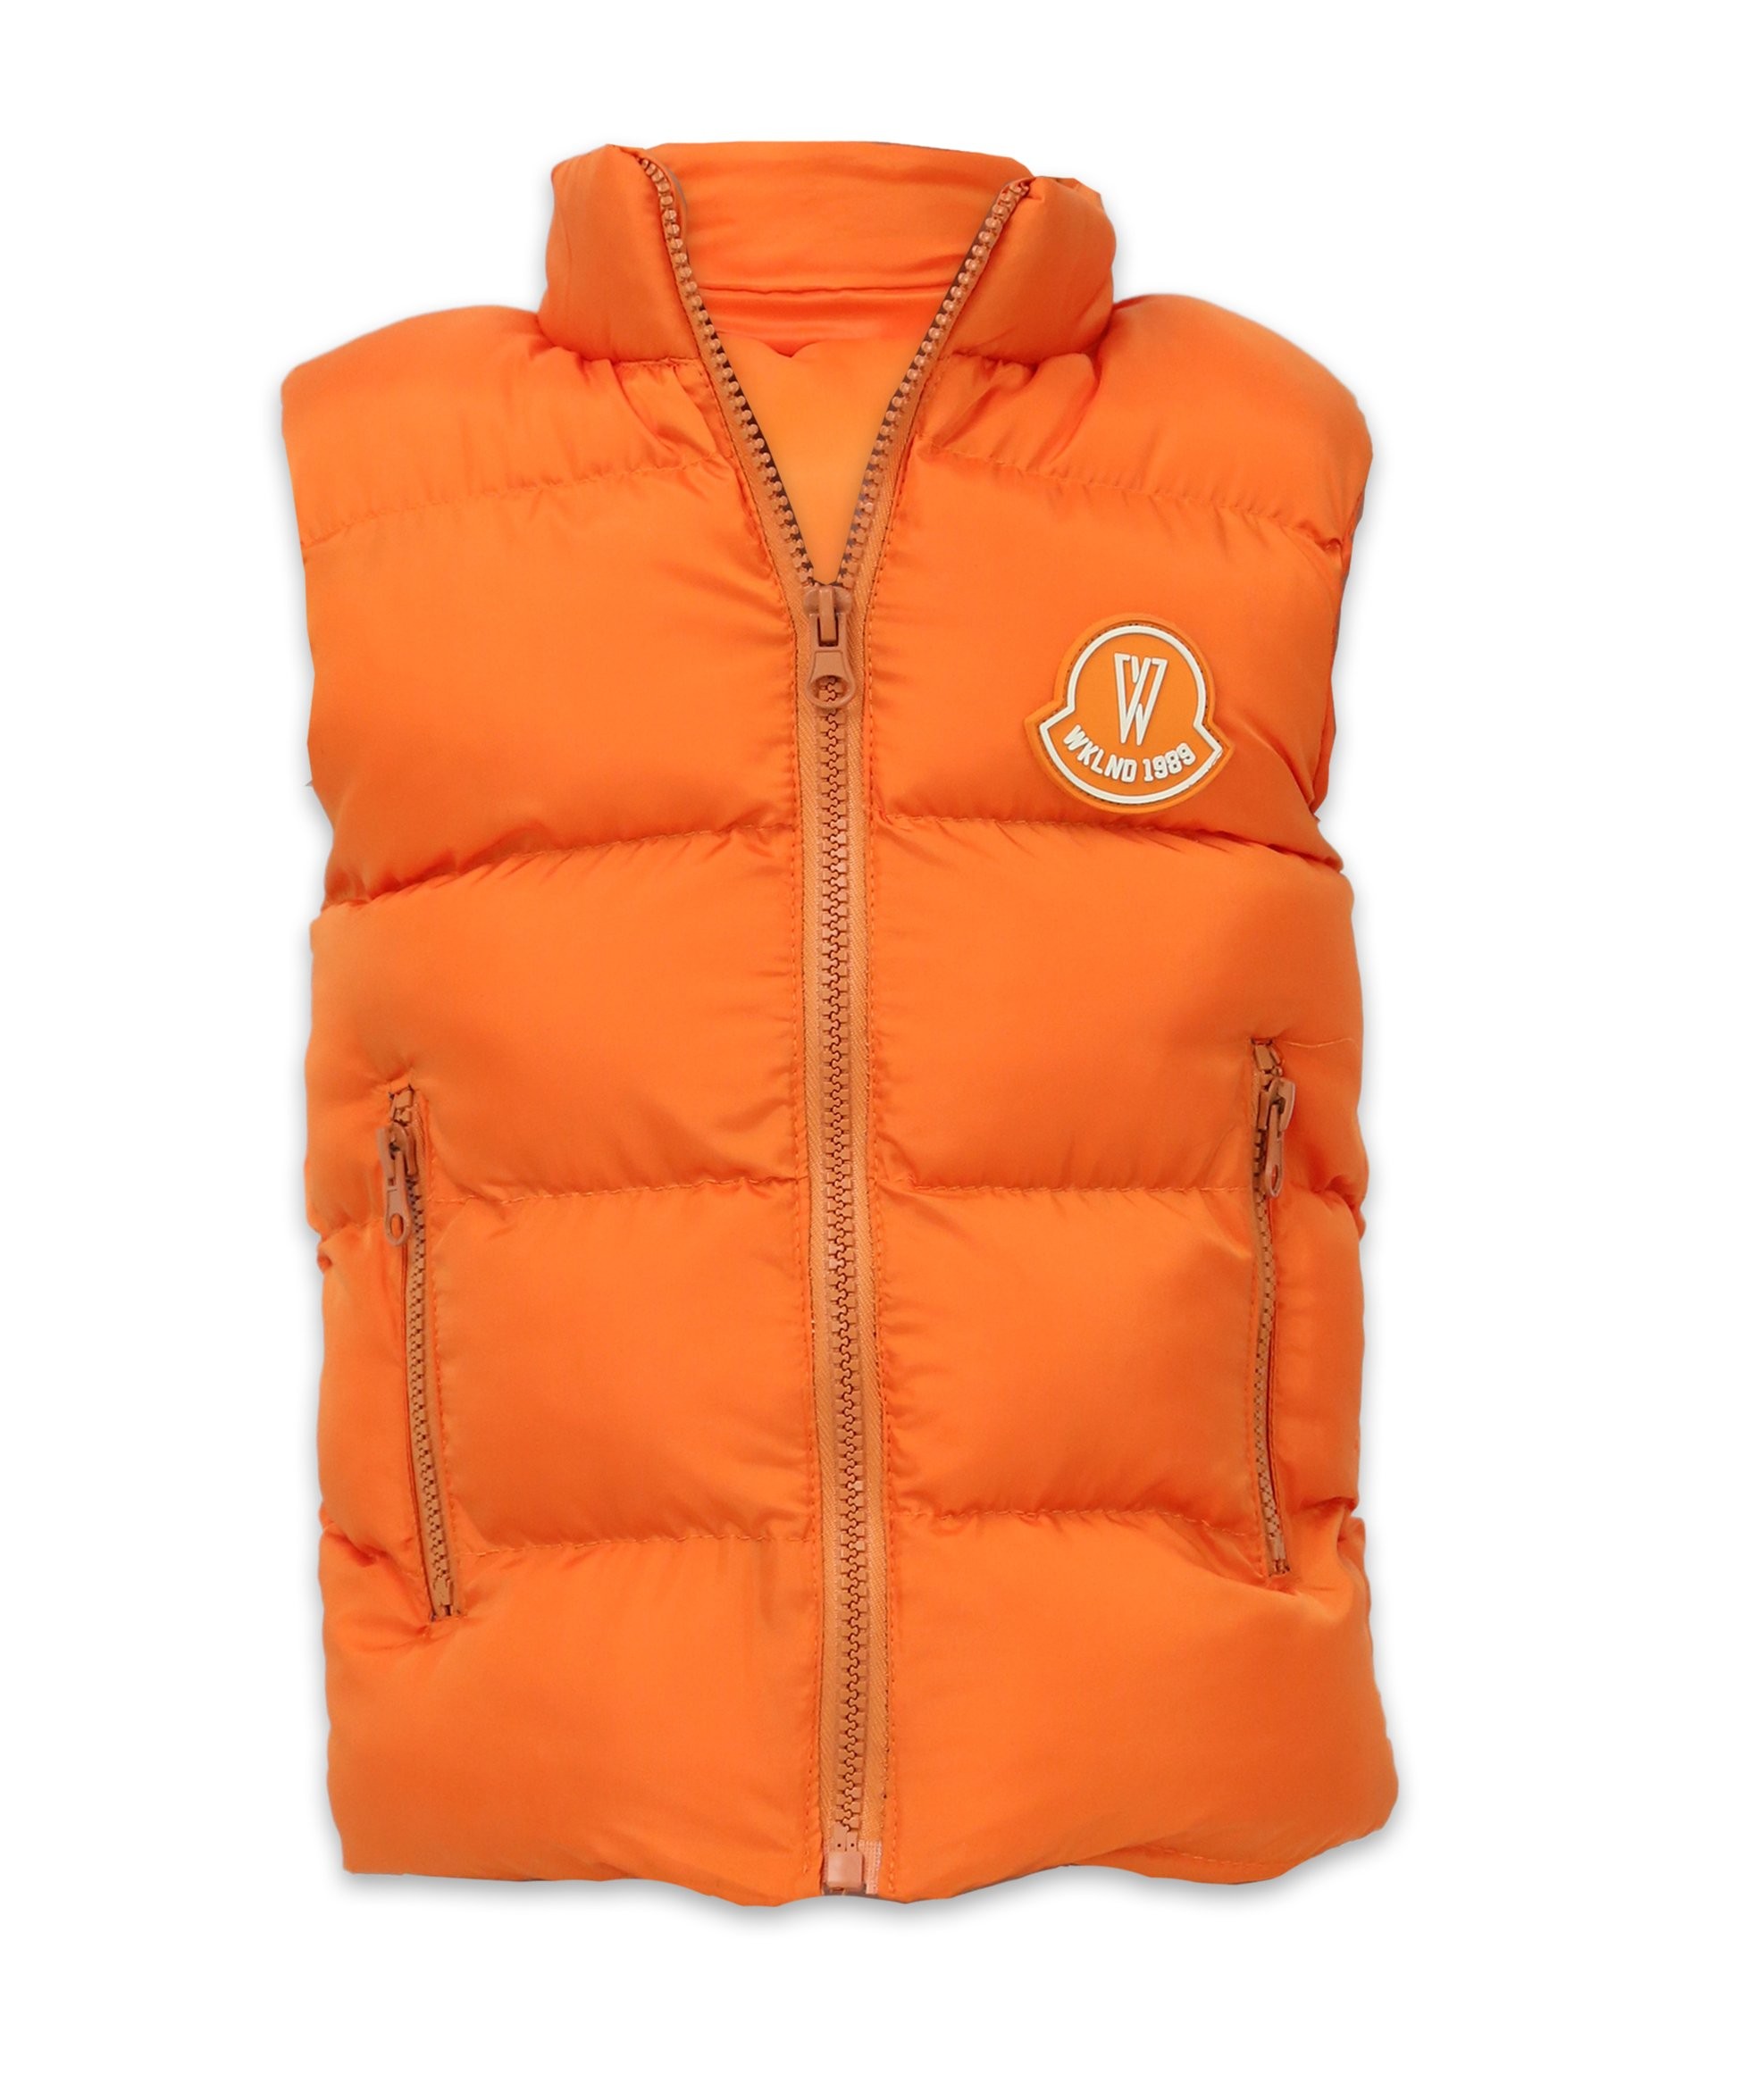 Boys Puffer Vest, Kids Padded Sleeveless Winter Outerwear - Orange